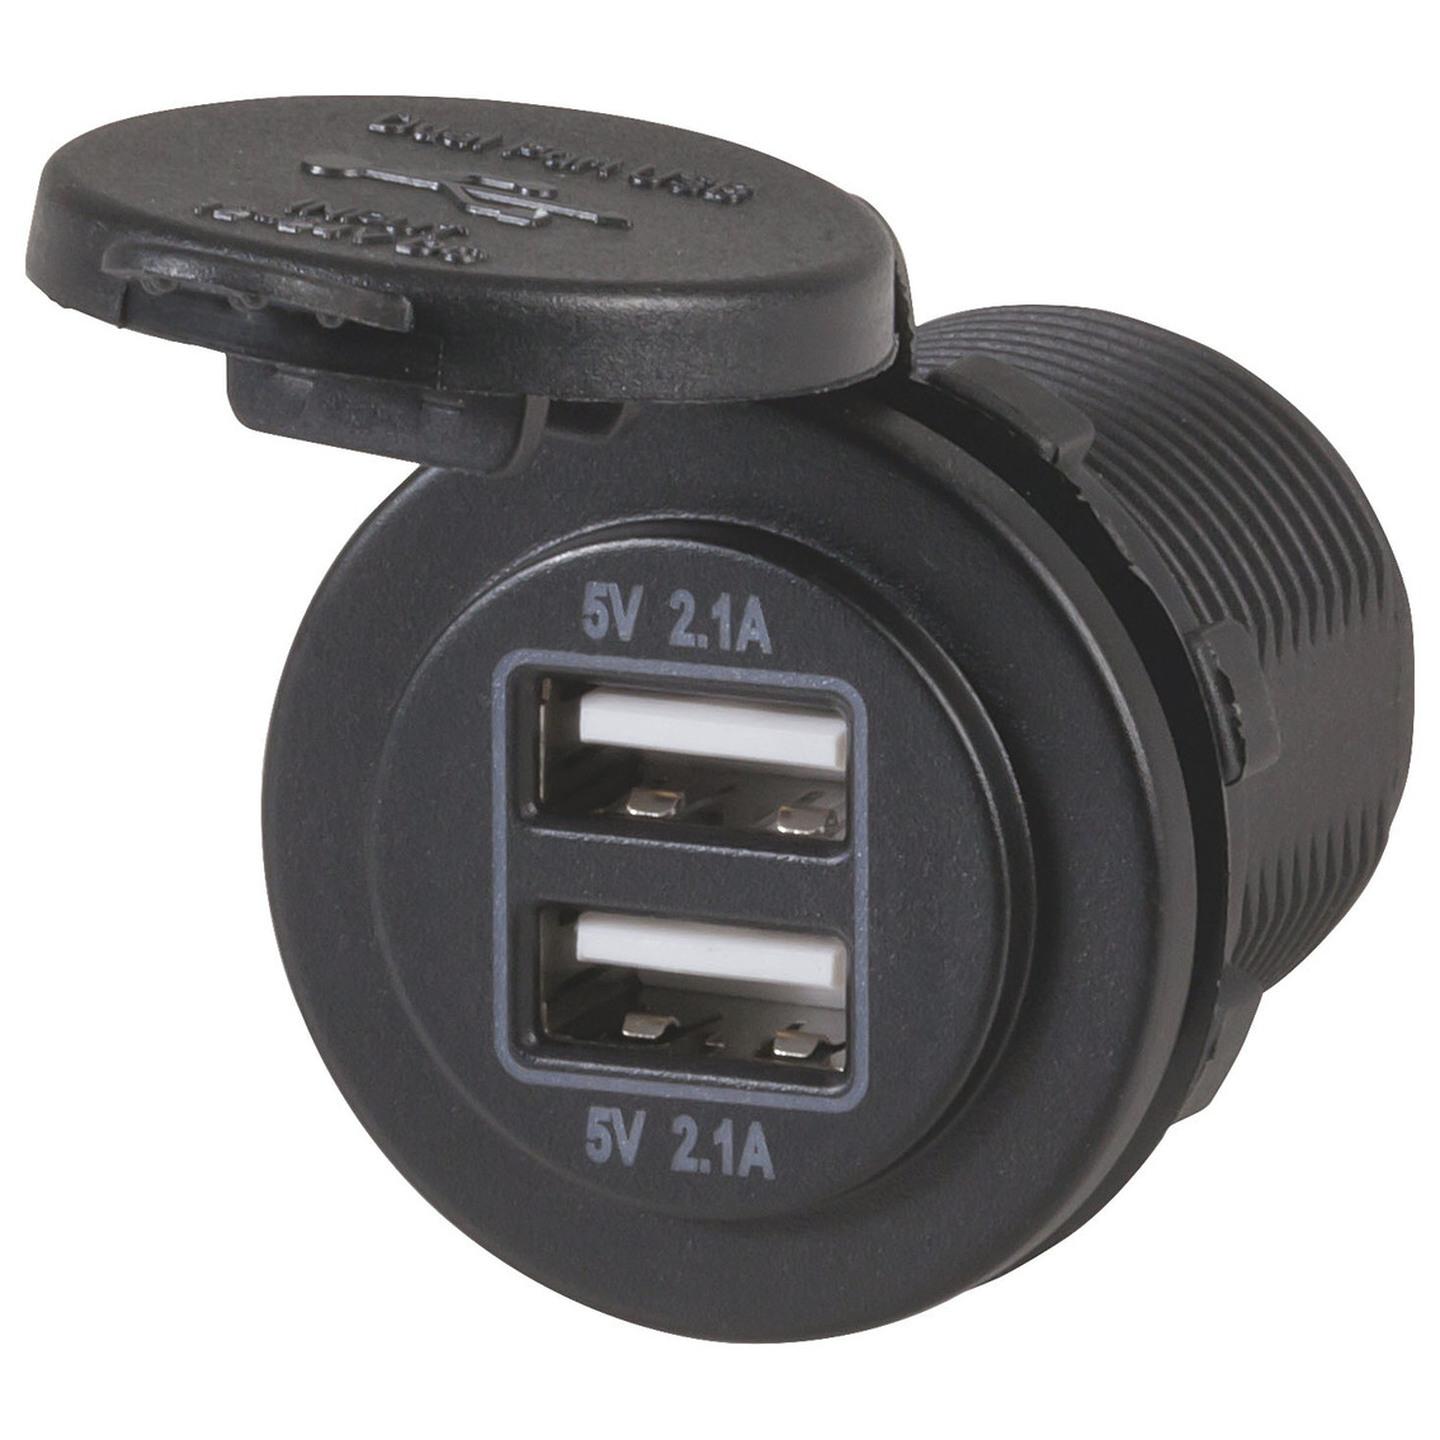 Easy-Install 2x2.1A Dual USB Charging Ports